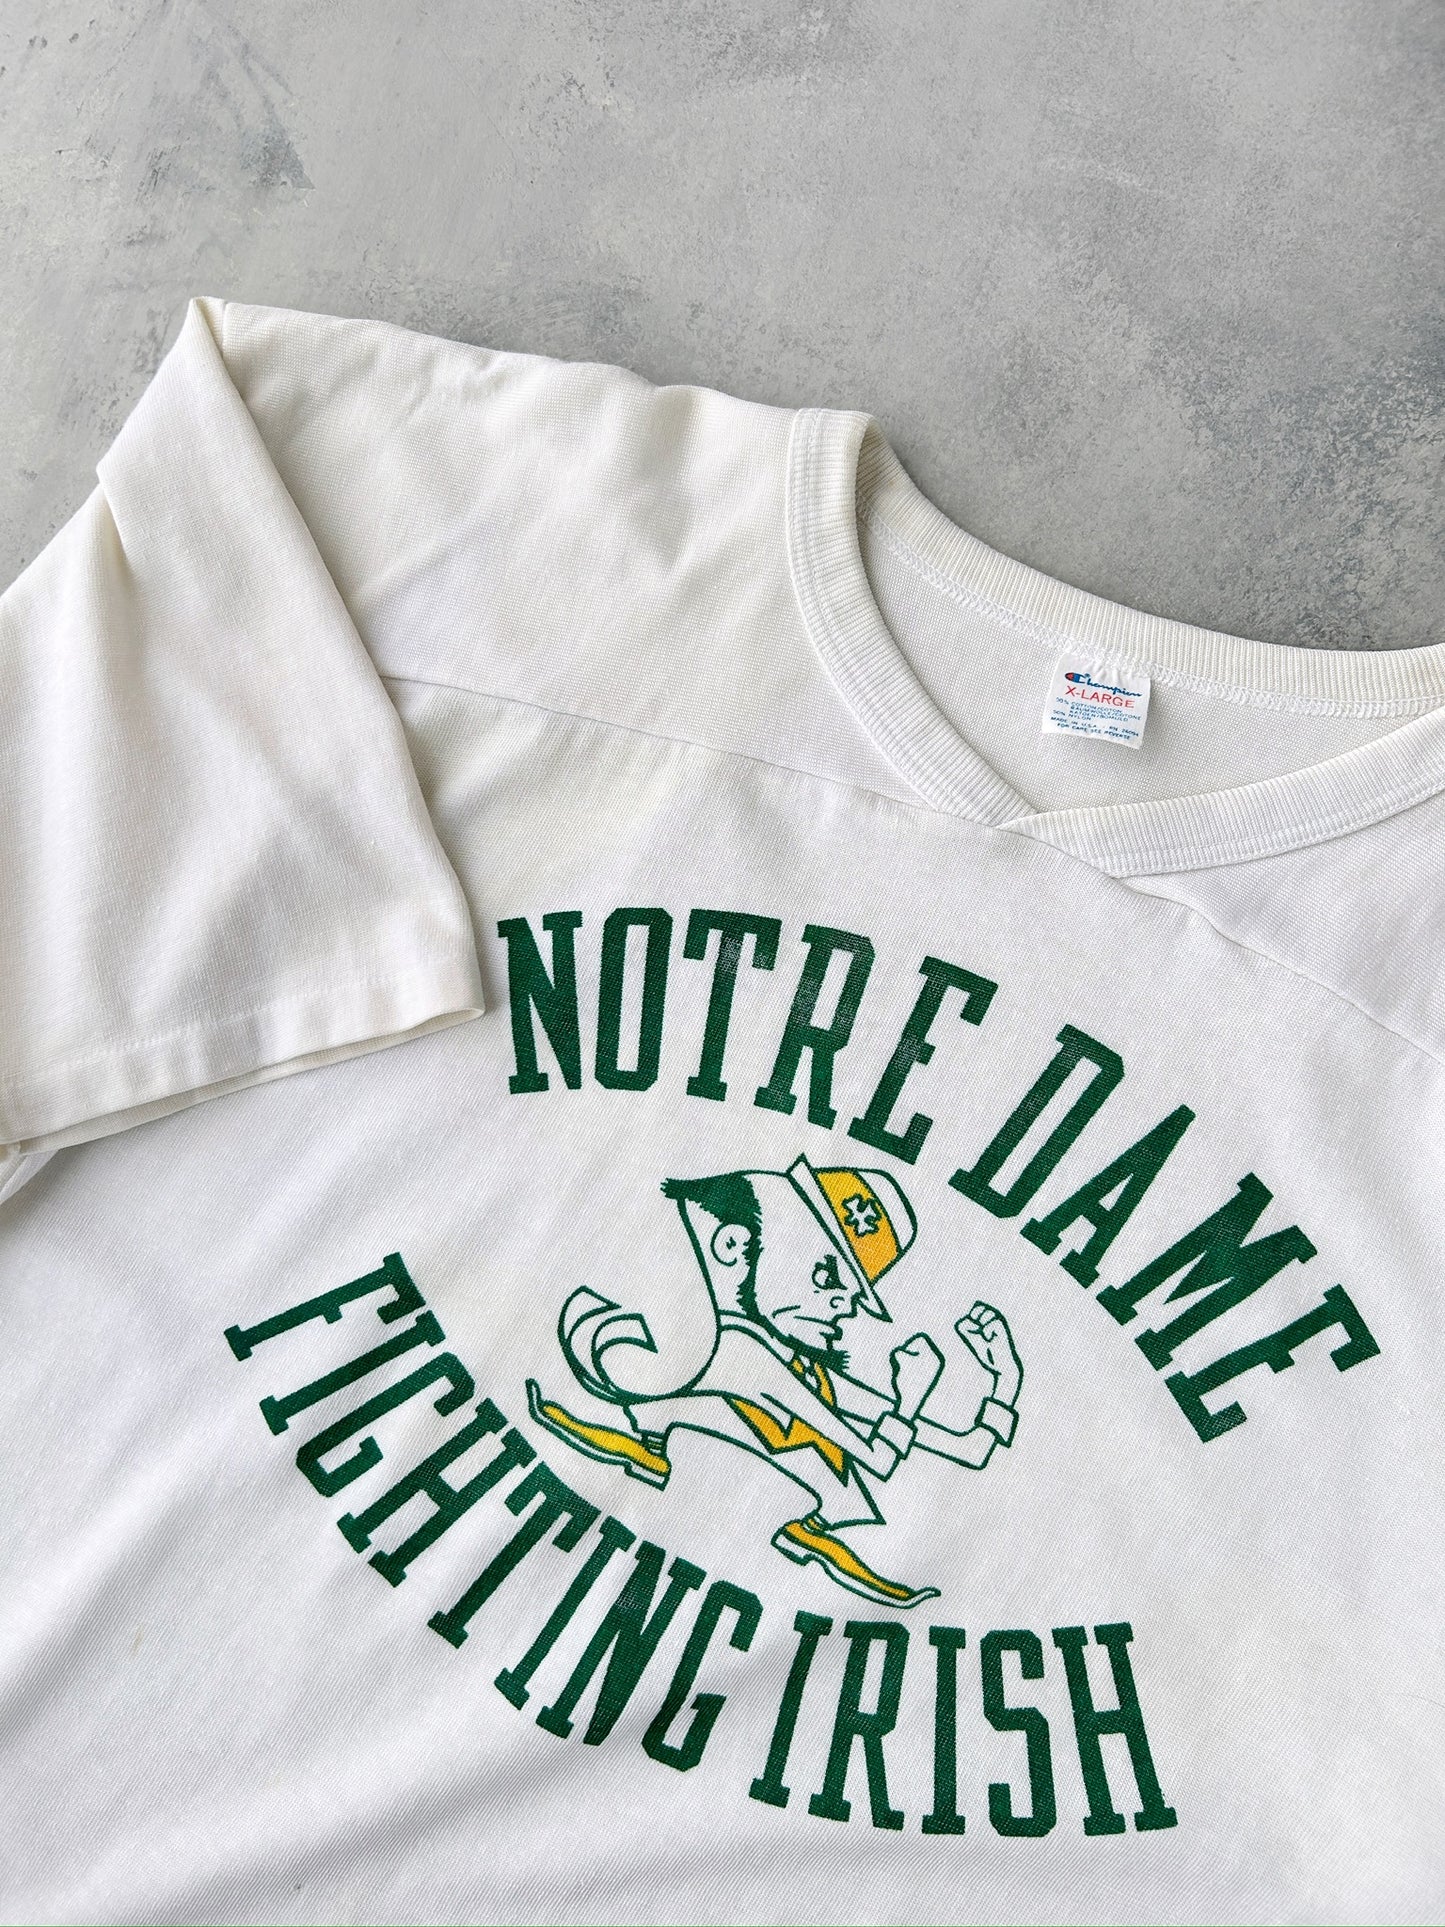 University of Notre Dame Jersey Shirt 80's - XL